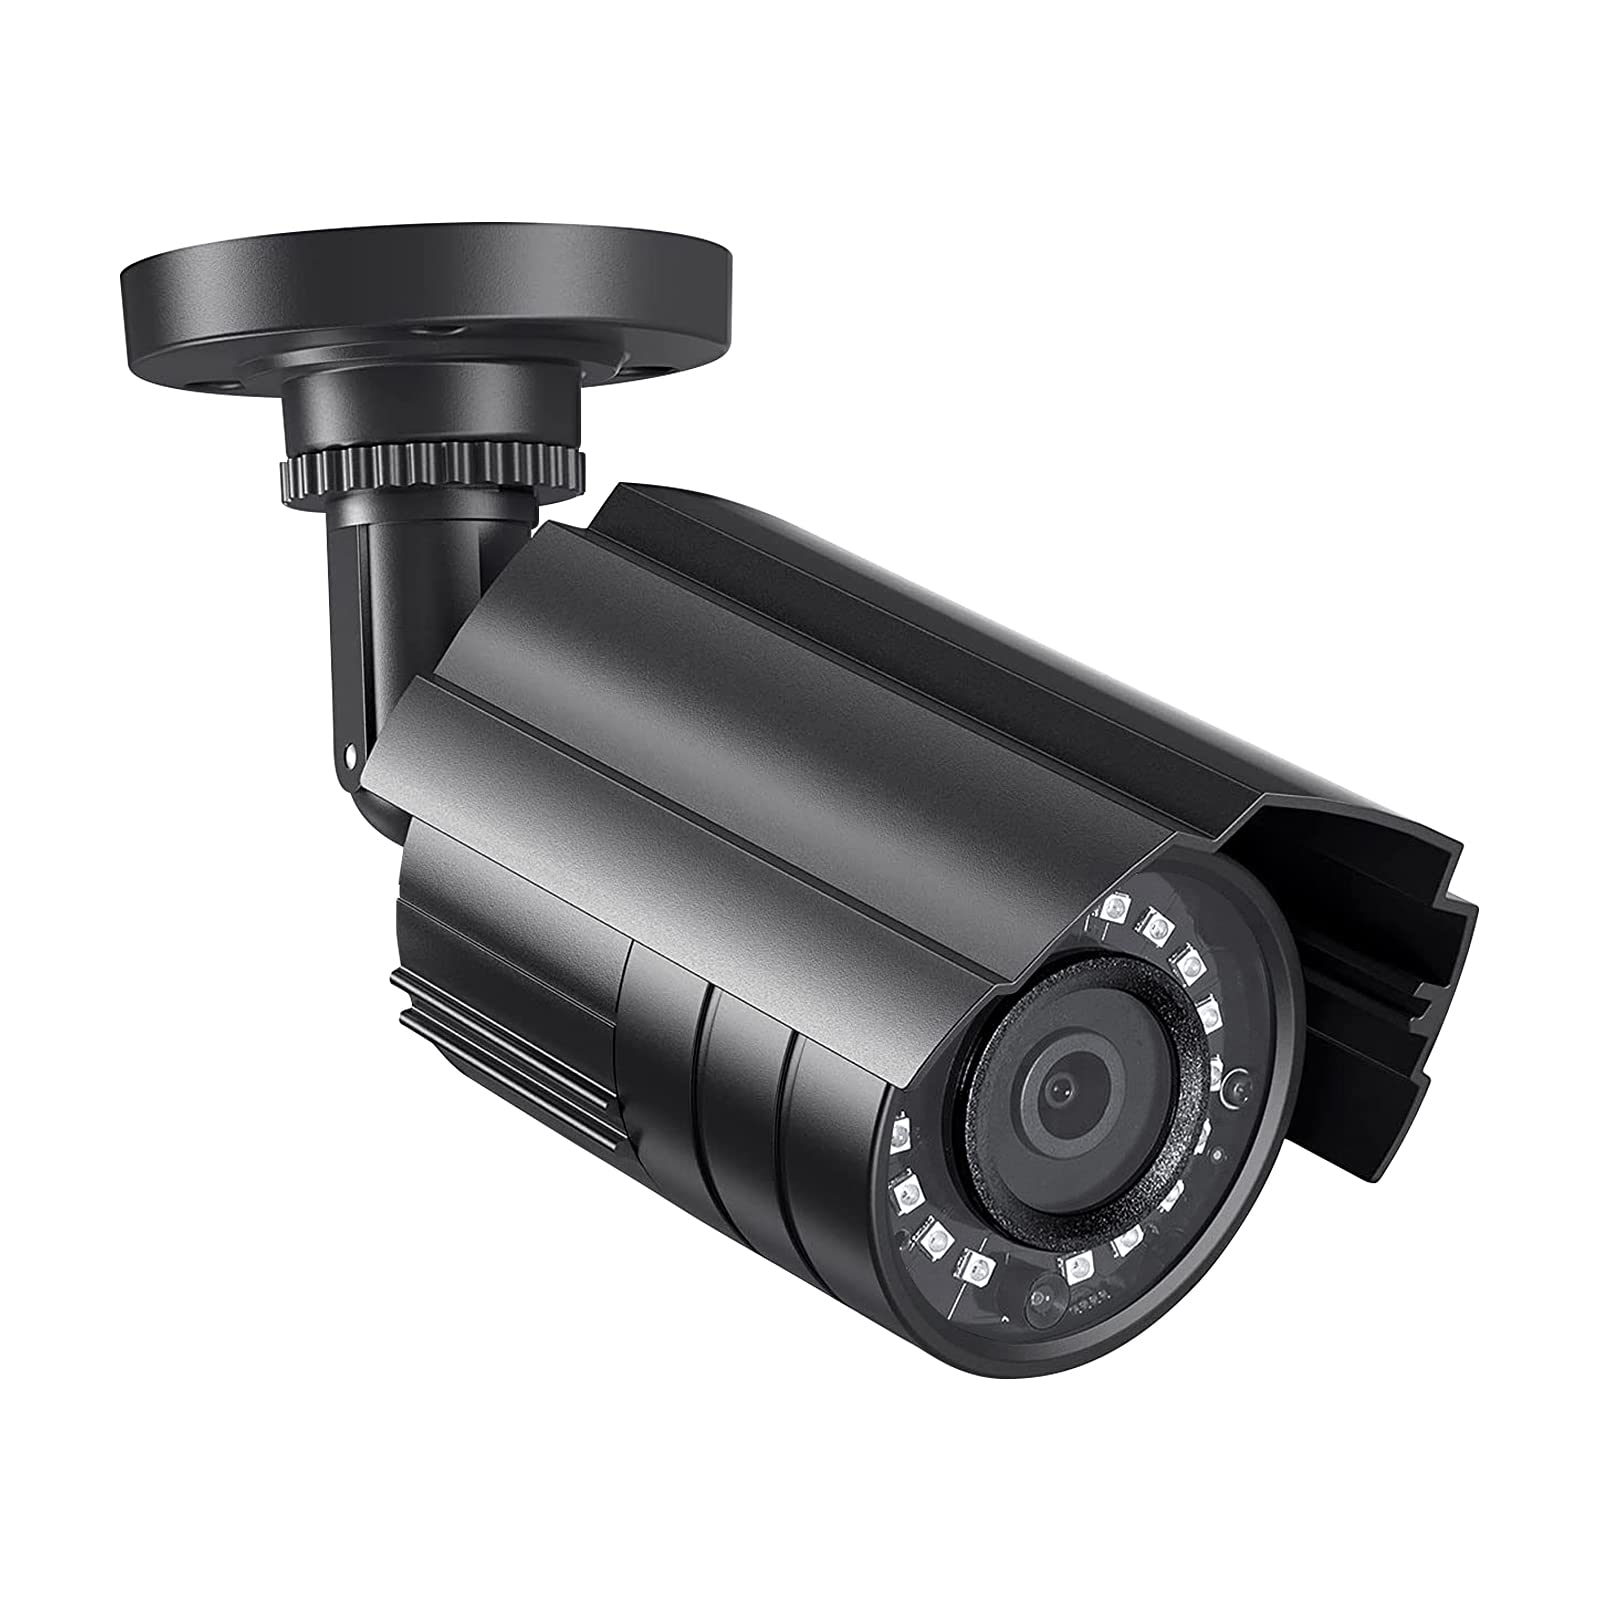 Rraycom 1080P HD 2000TVL Security Camera - 4-in-1 TVI/CVI/AHD/960H, 115ft IR Night Vision, IP67 Weatherproof Bullet Camera for Analog Surveillance DVR